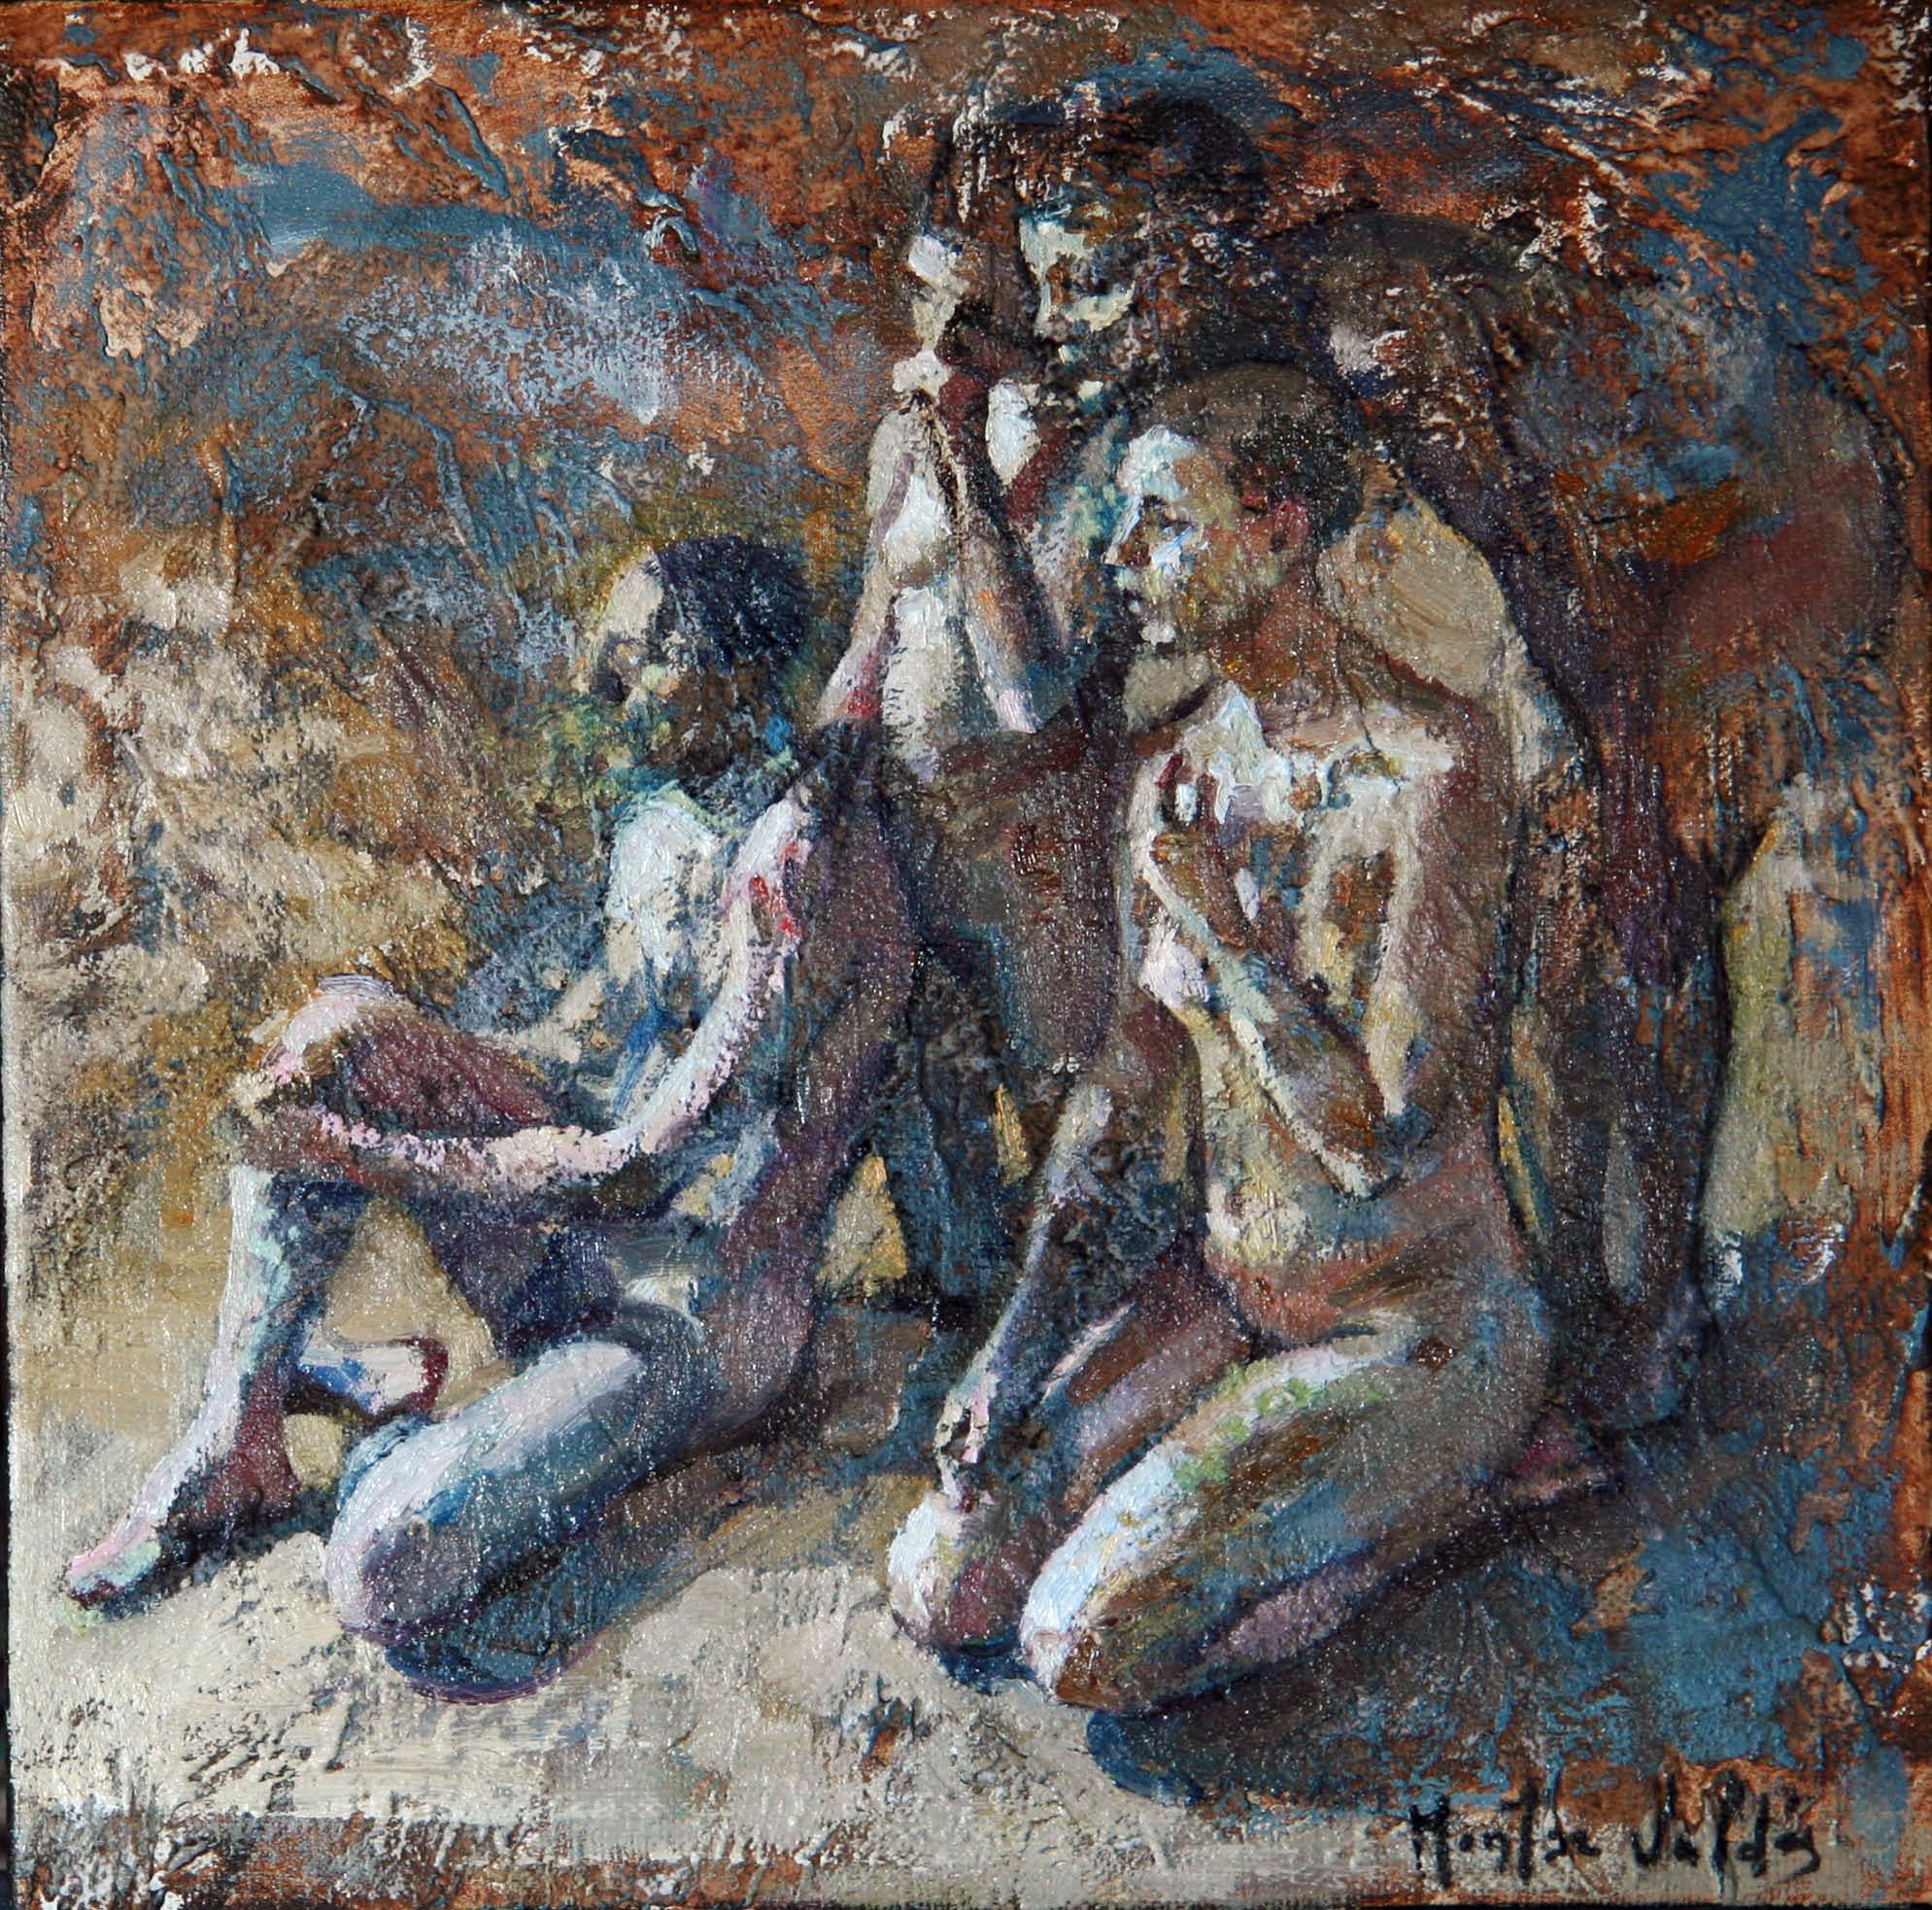 Montse Valdés Portrait Painting - 8-9-08 - 21st Century, Contemporary, Nude Painting, Oil on Canvas